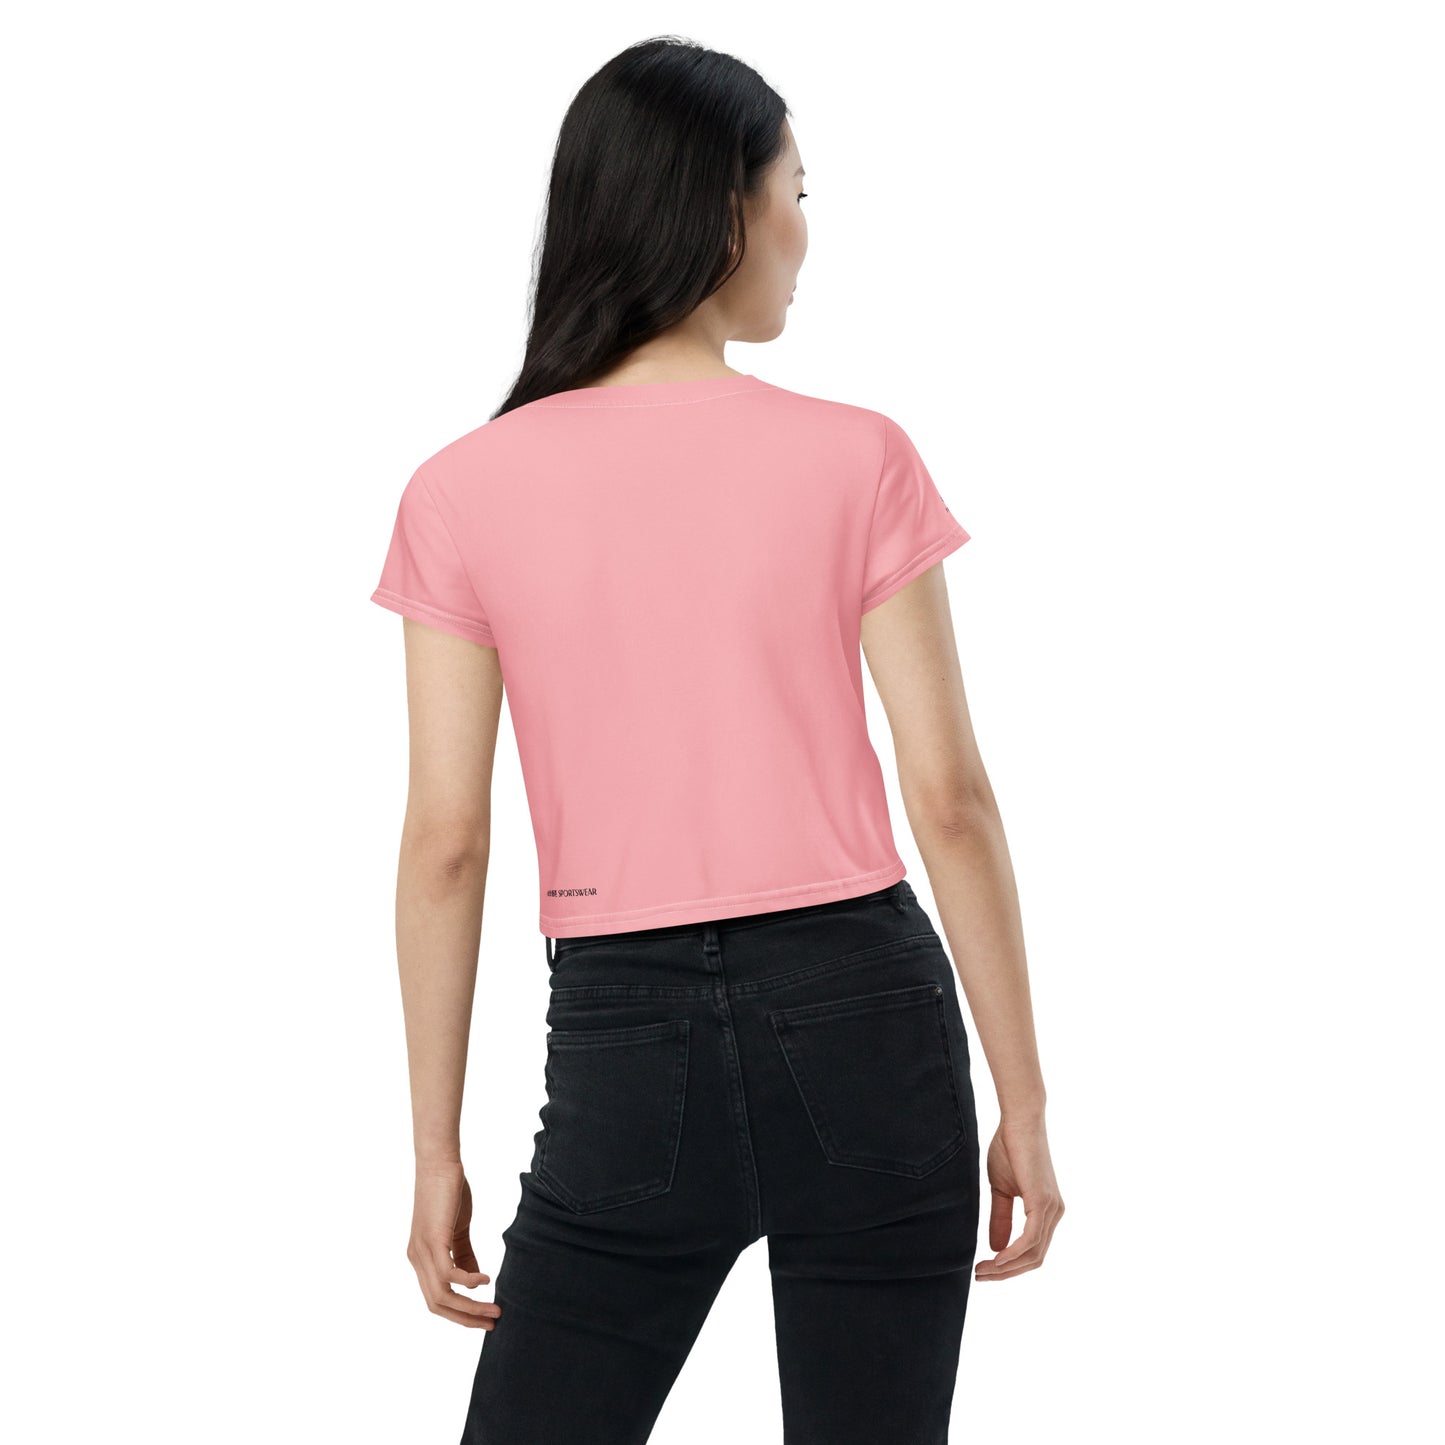 Humble Sportswear, women's Color Match activewear pink crop t-shirt